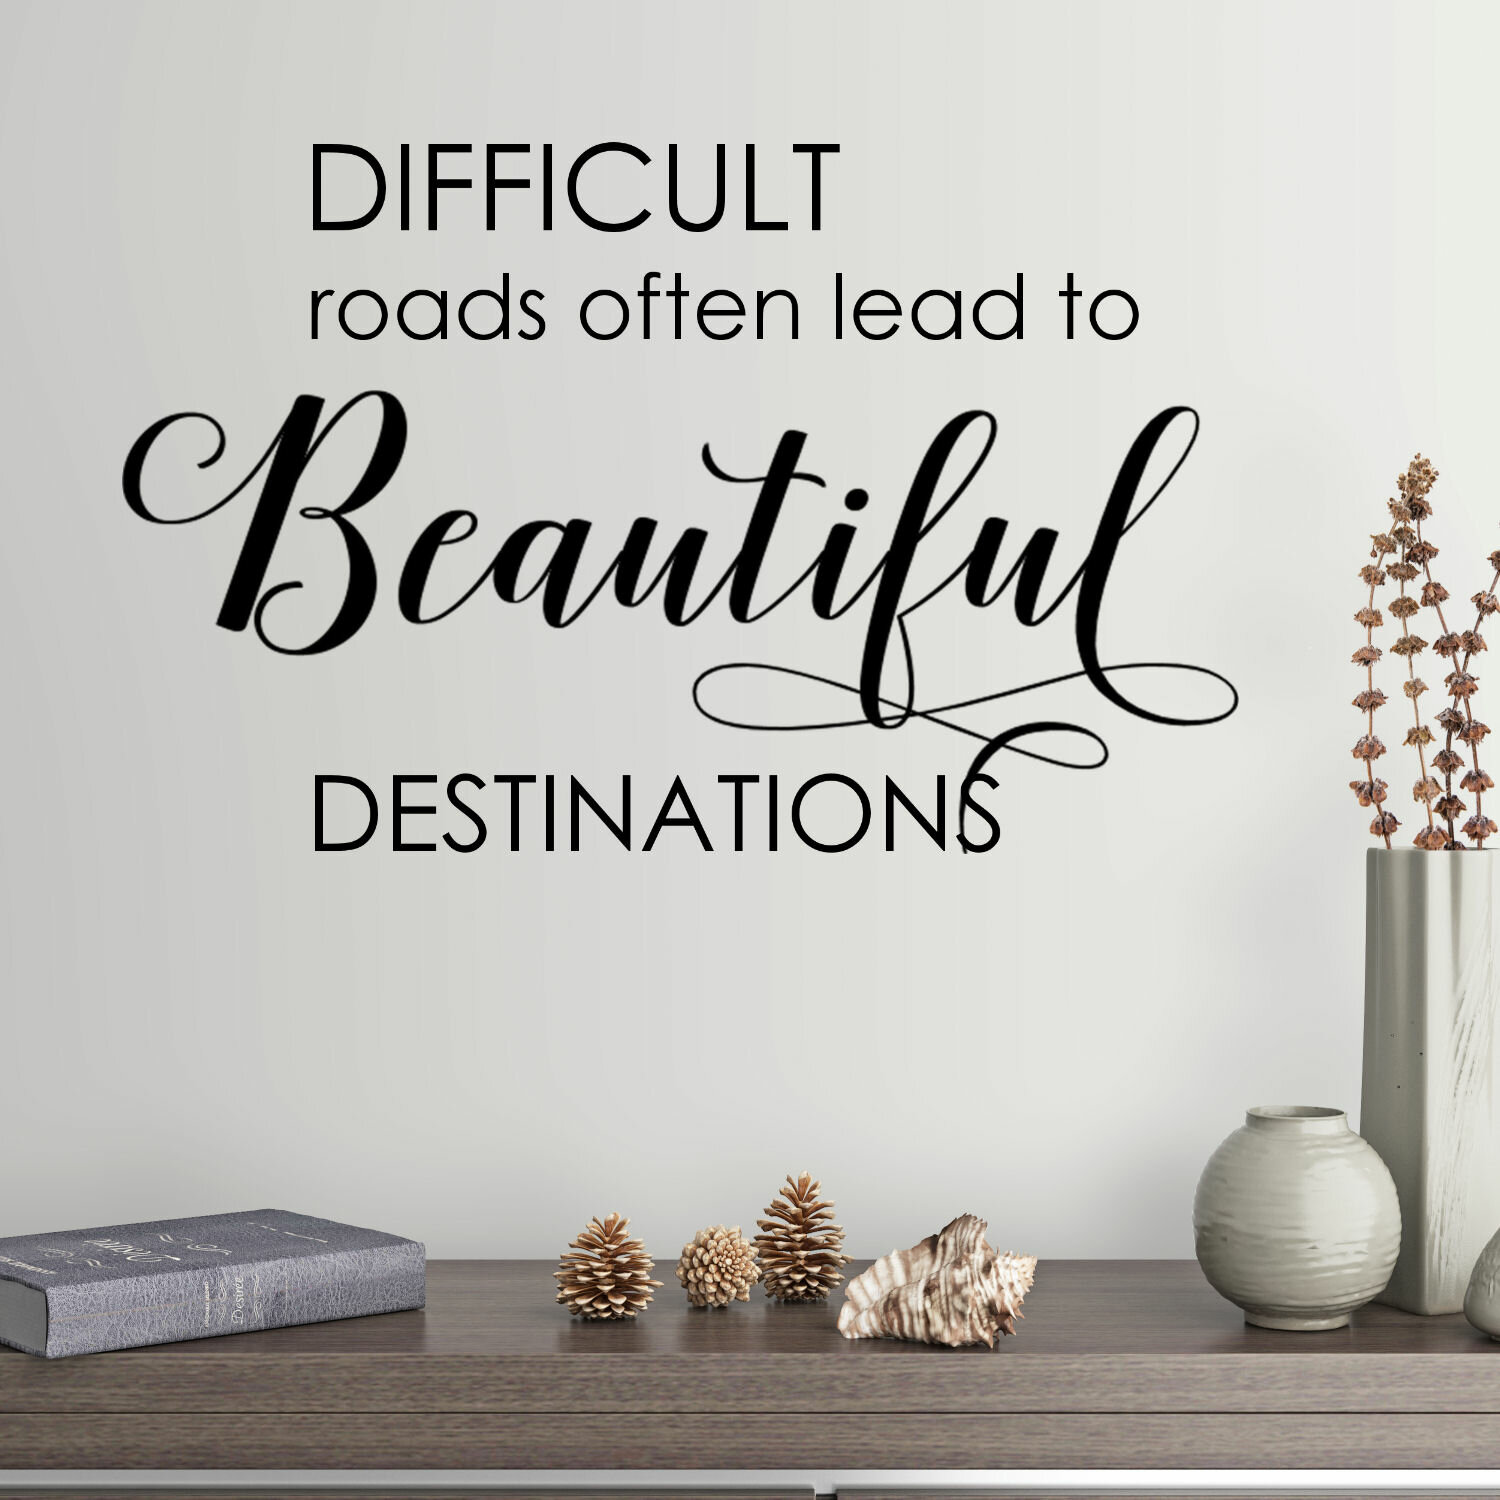 Difficult roads, destinations